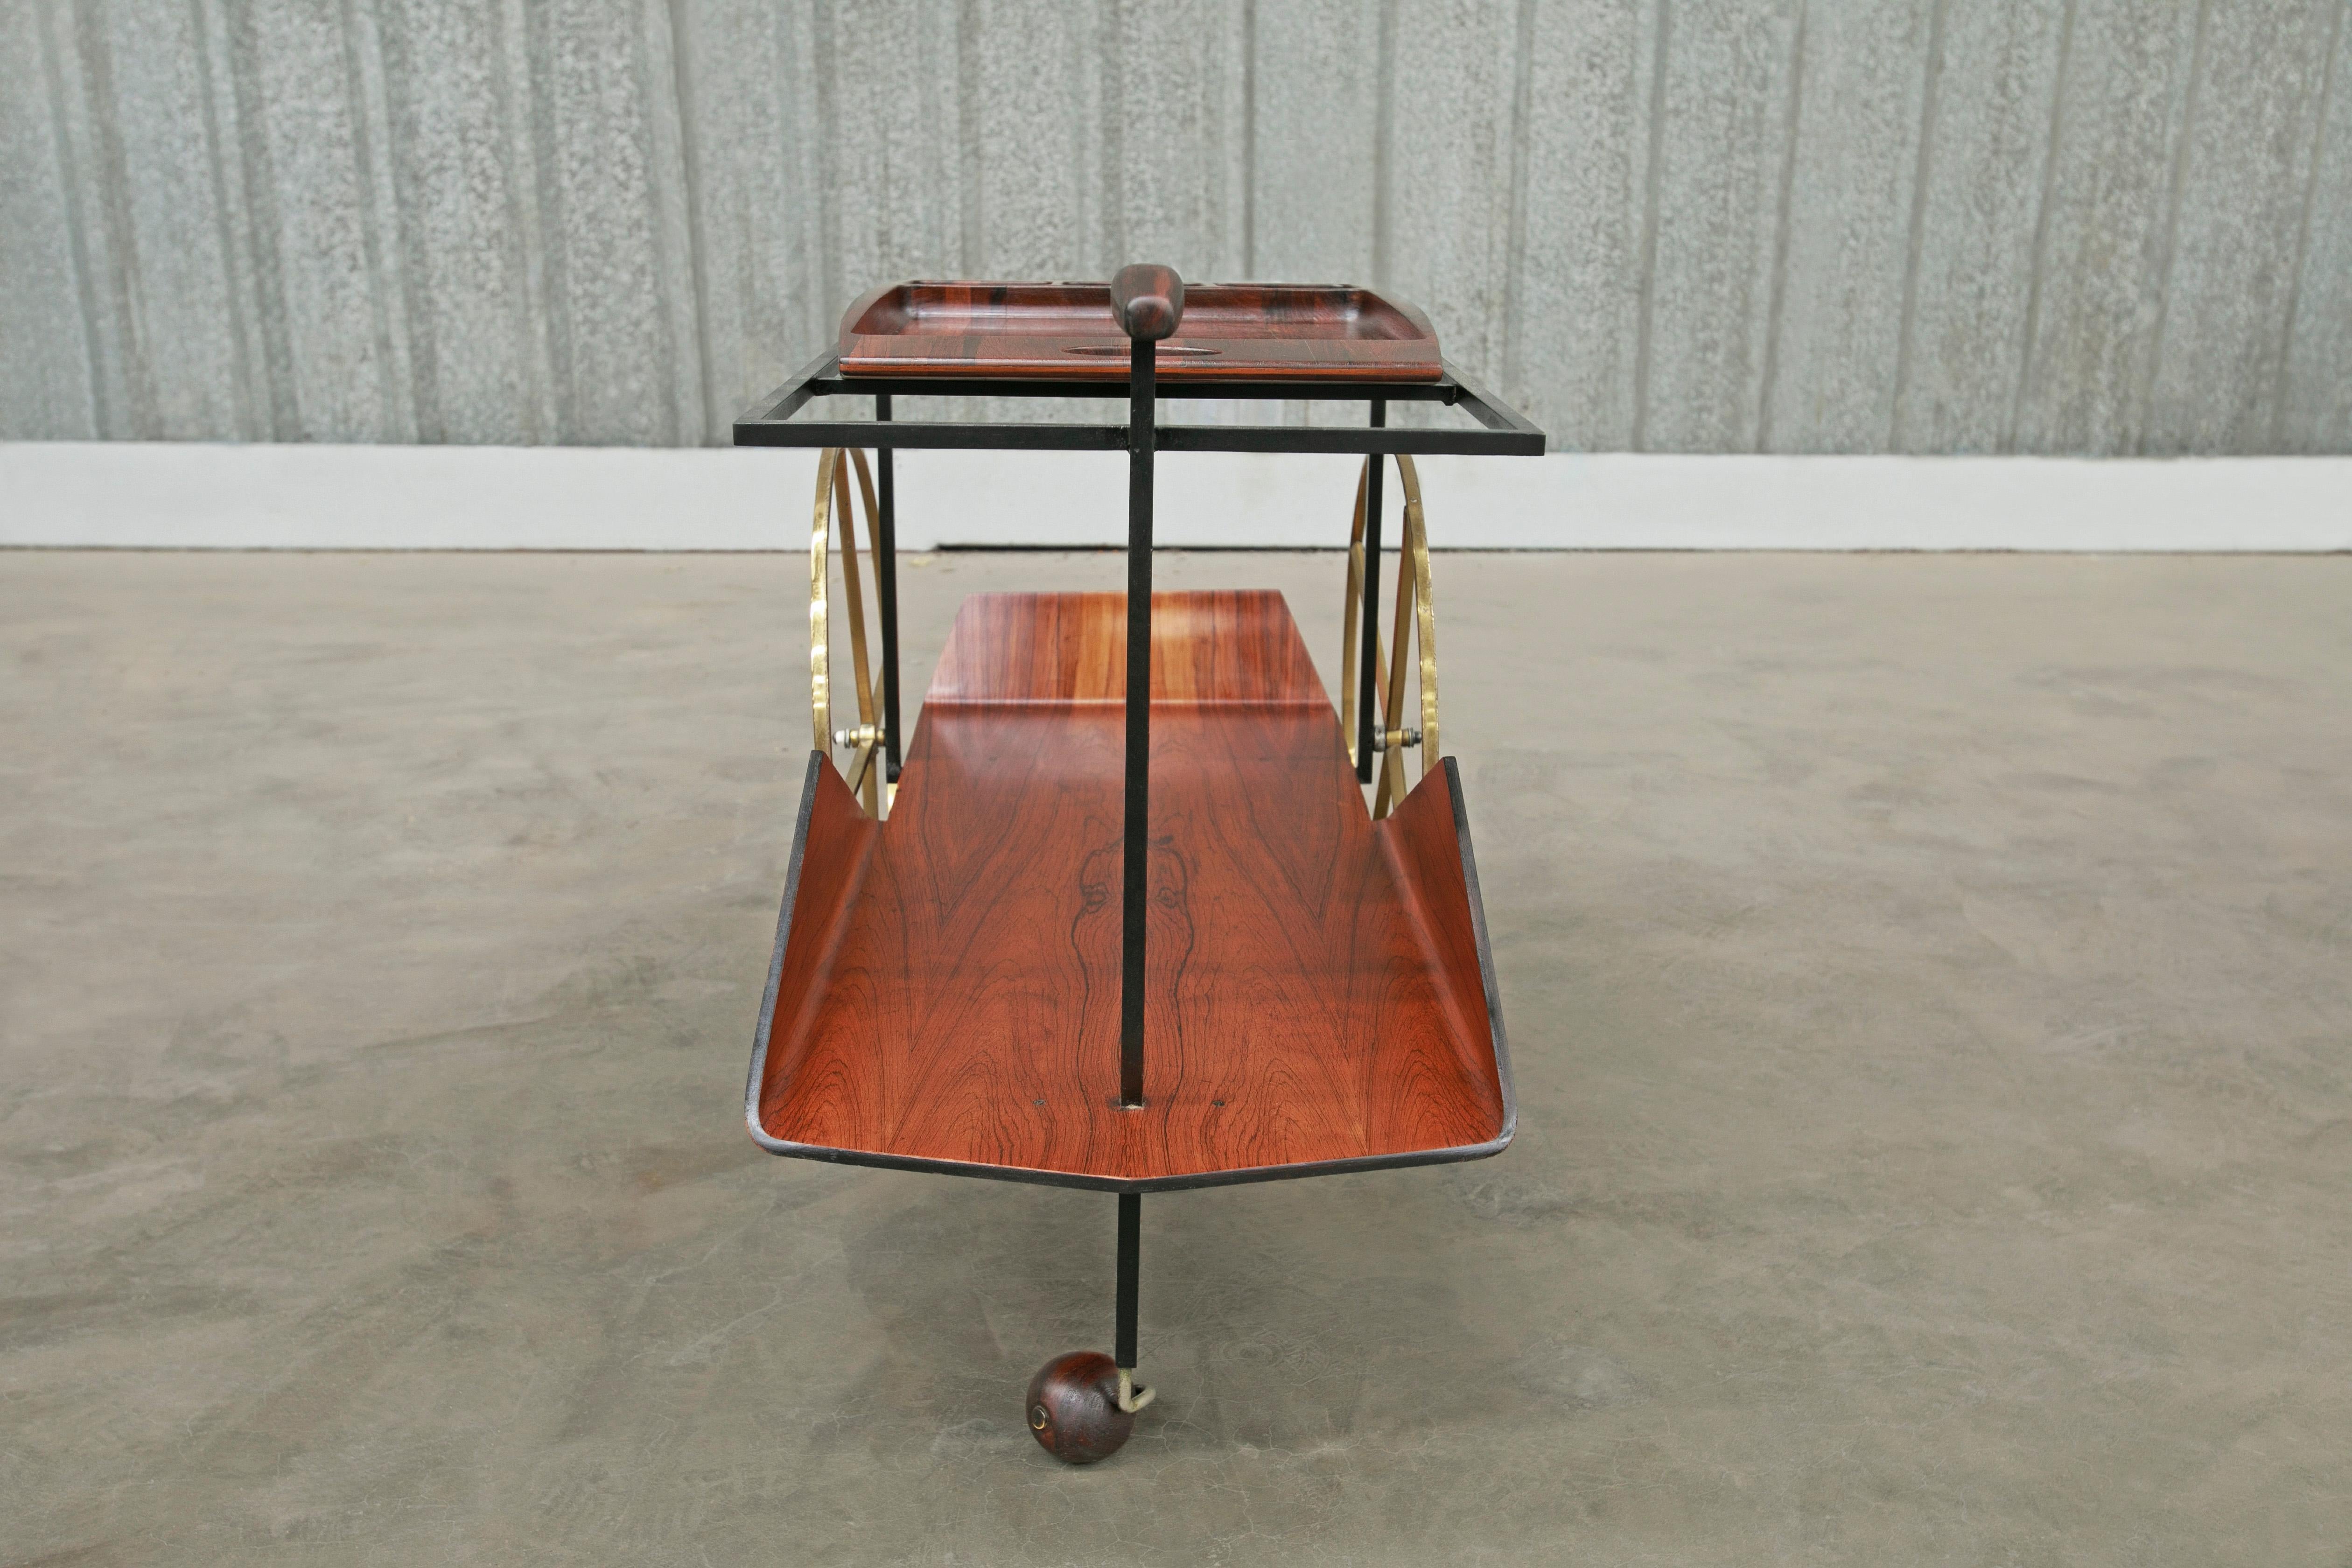 Brazilian “Carrinho de Cha” Bar Cart in Hardwood, Iron, & Brass by Jorge Zalszupin, 1950s For Sale